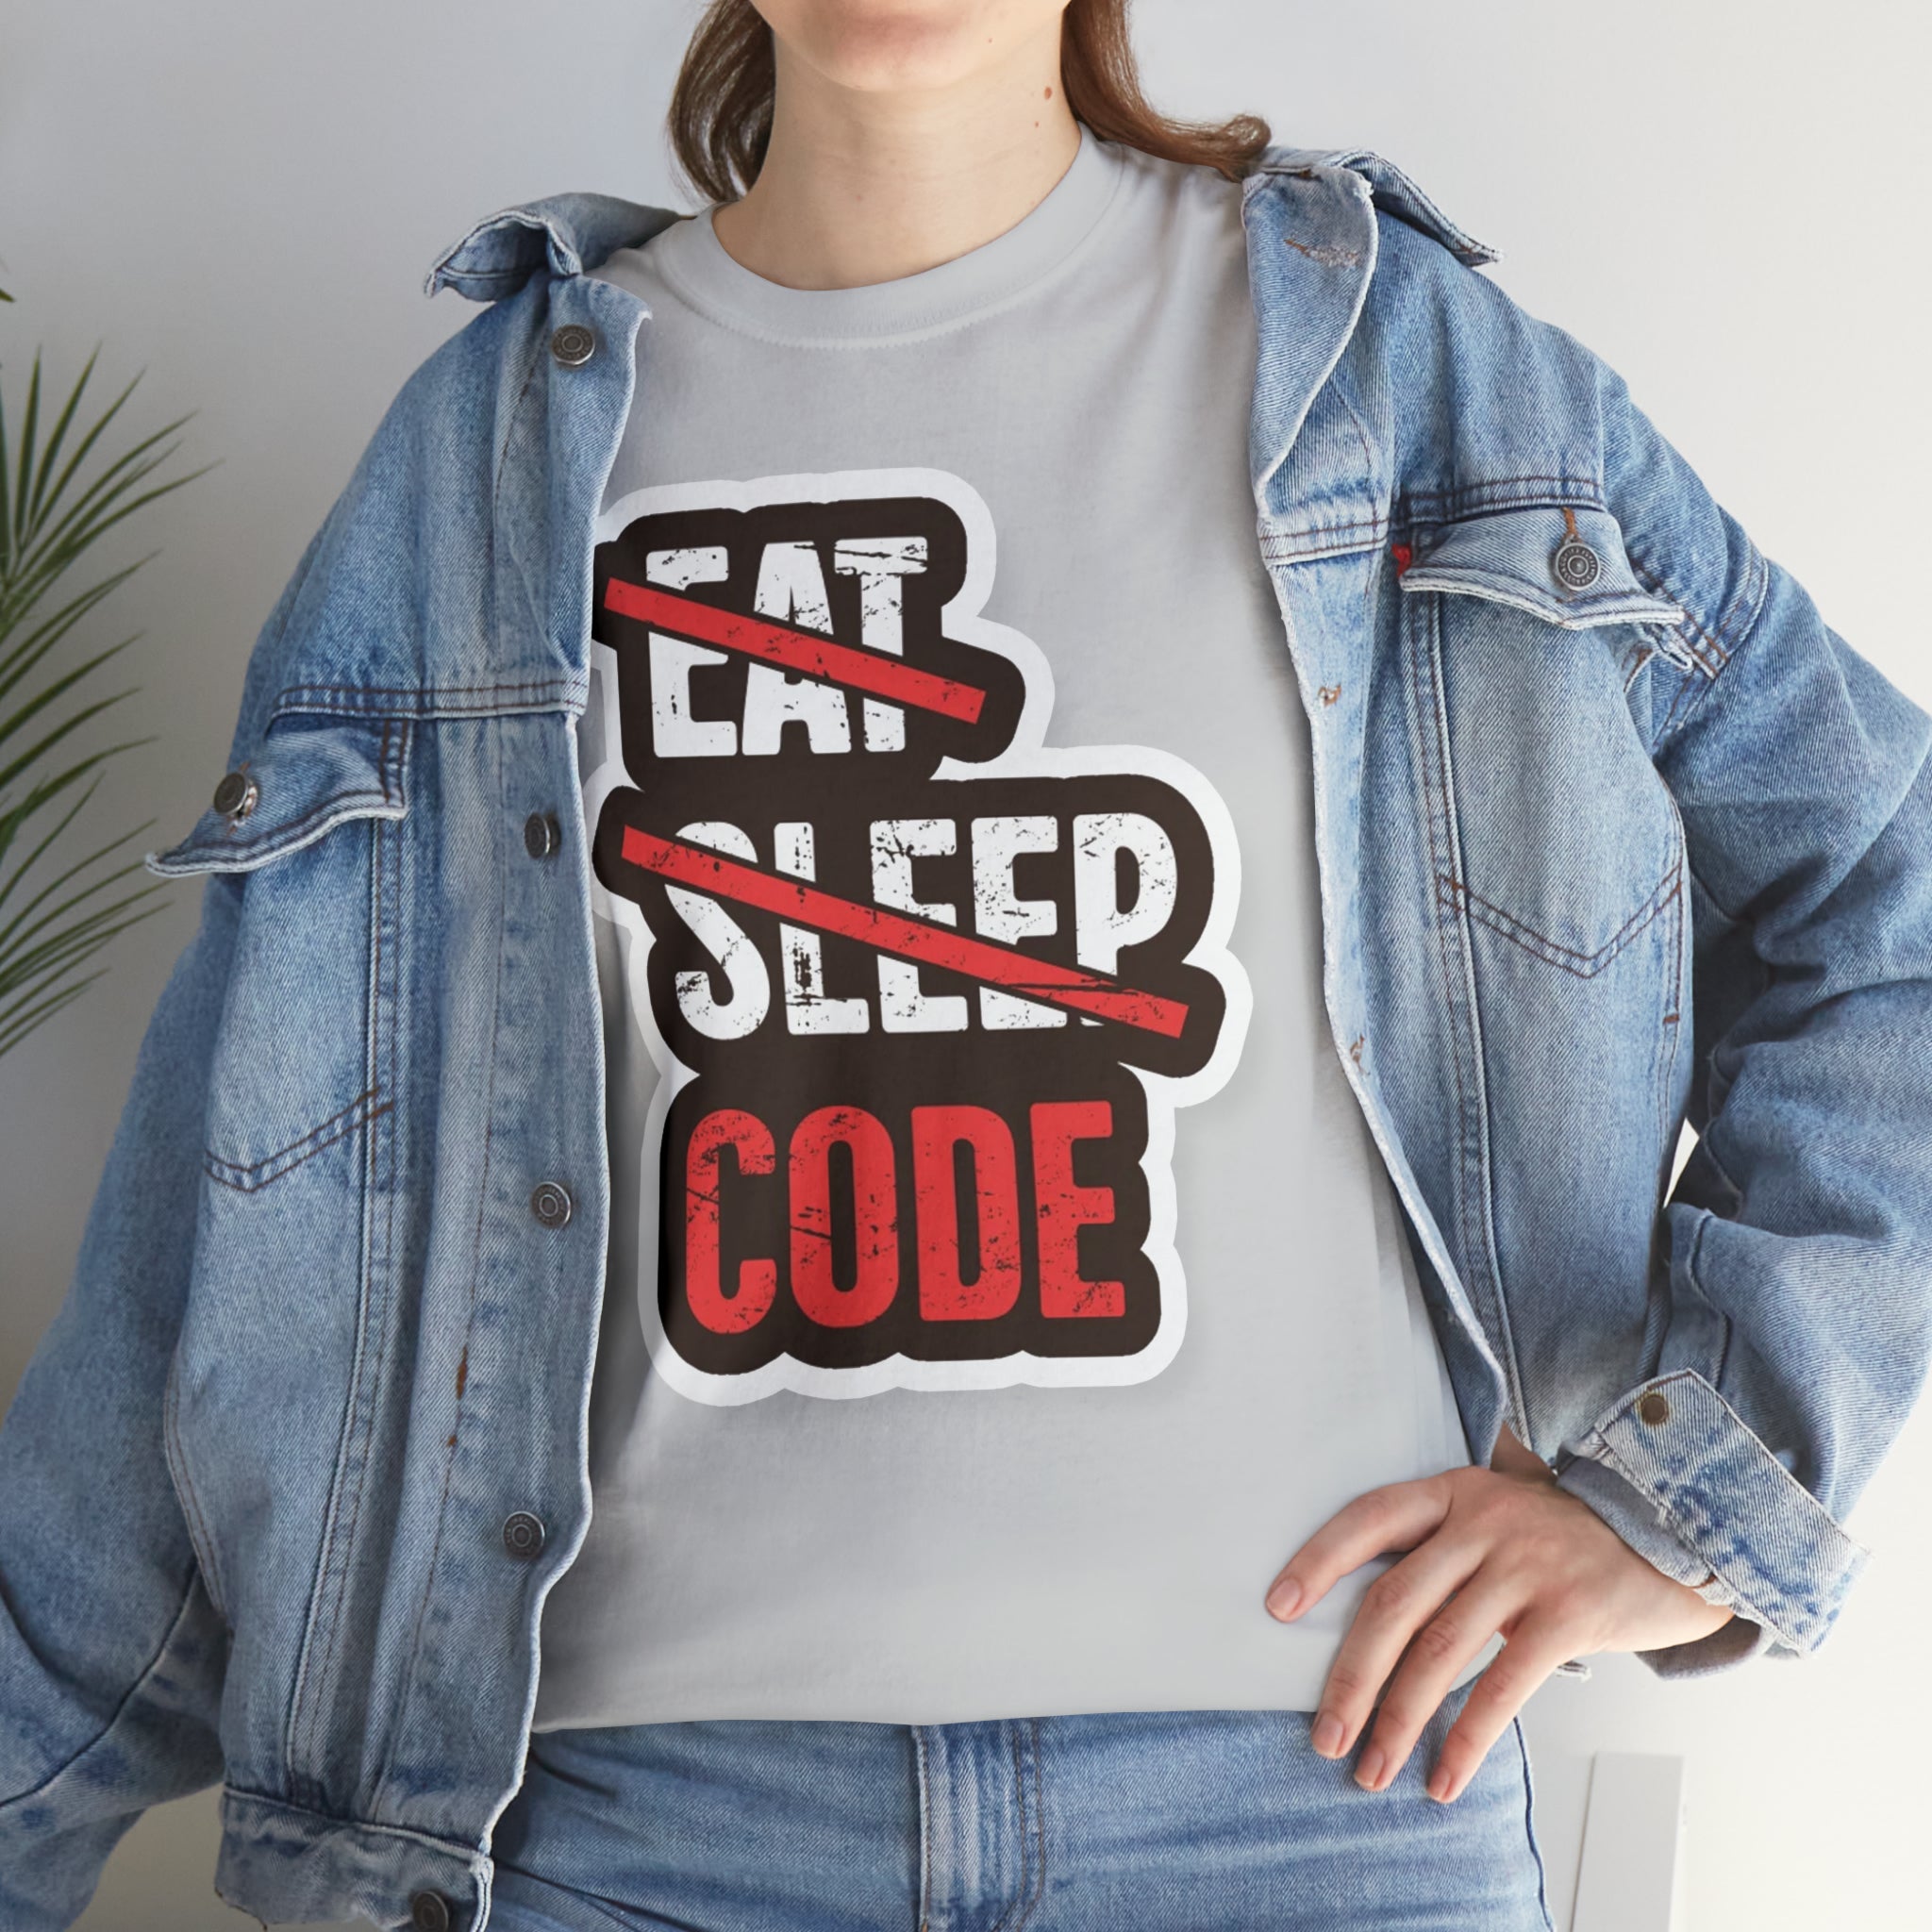 Eat Sleep Code T-Shirt Design by C&C